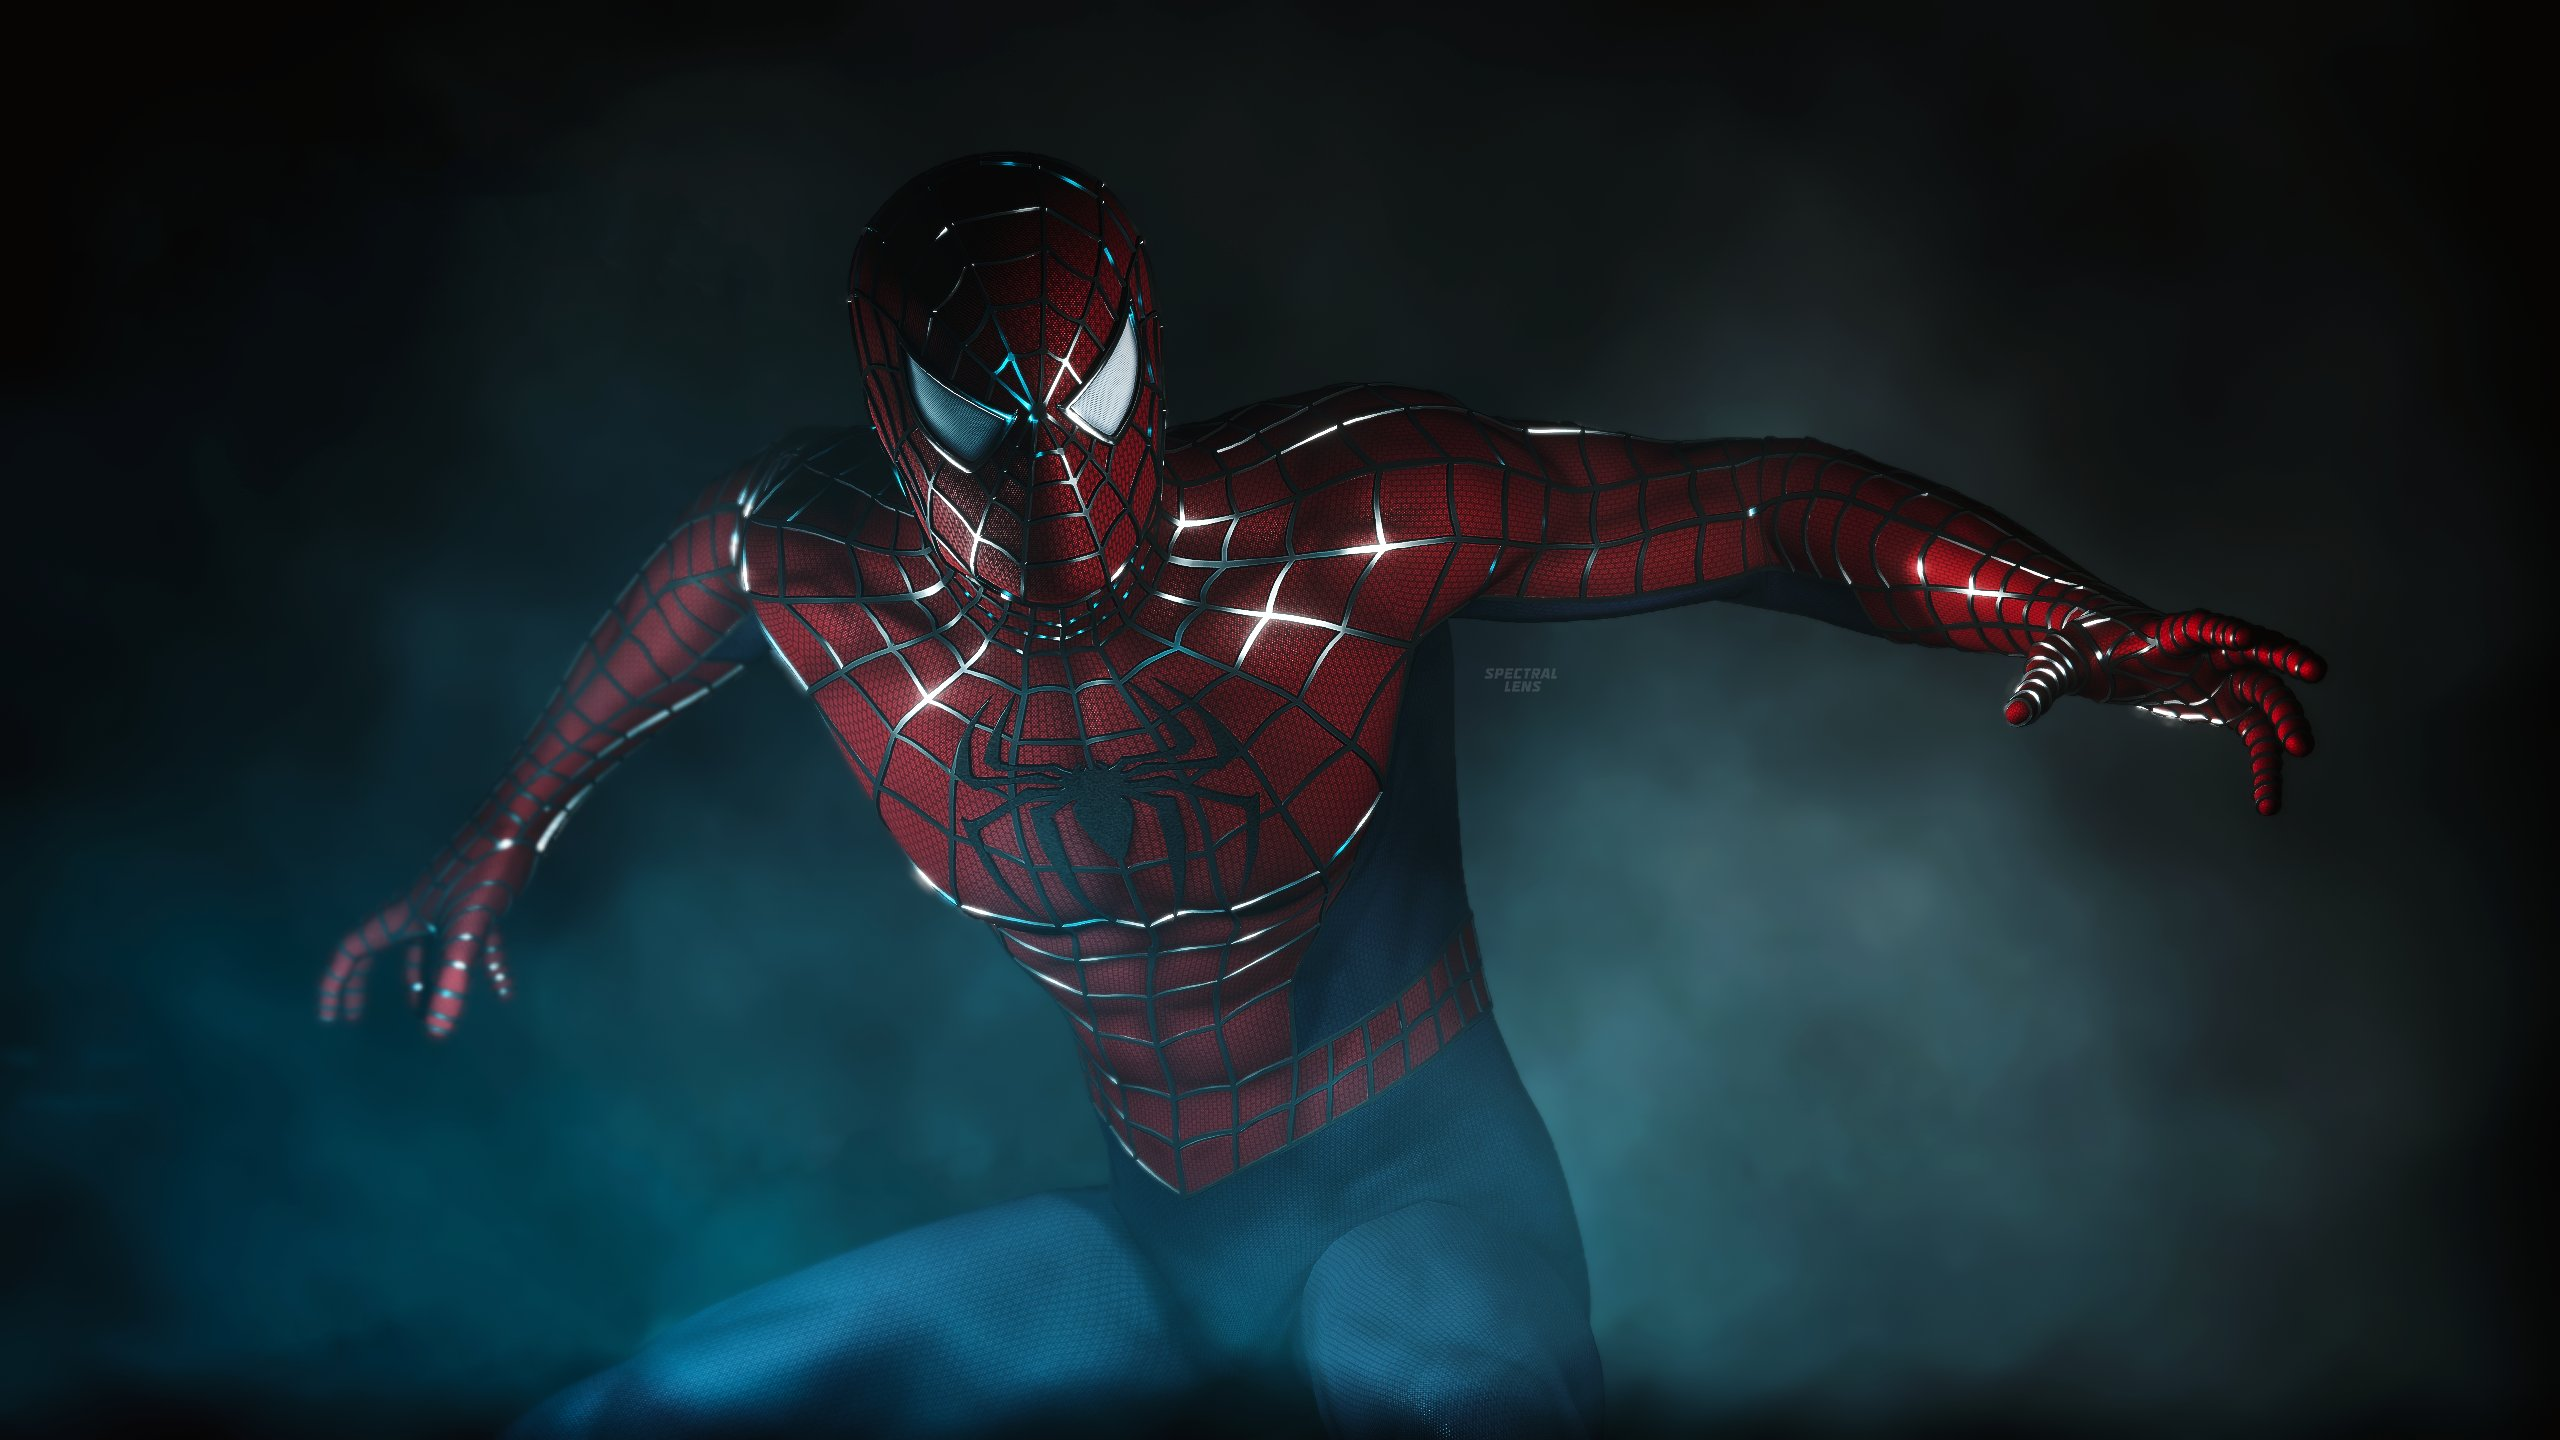 Спайдер мен пк. Спайдер Мэн ремастер. Spider man Remastered. Марвел человек паук ремастер. Spider-man (игра, 2018).